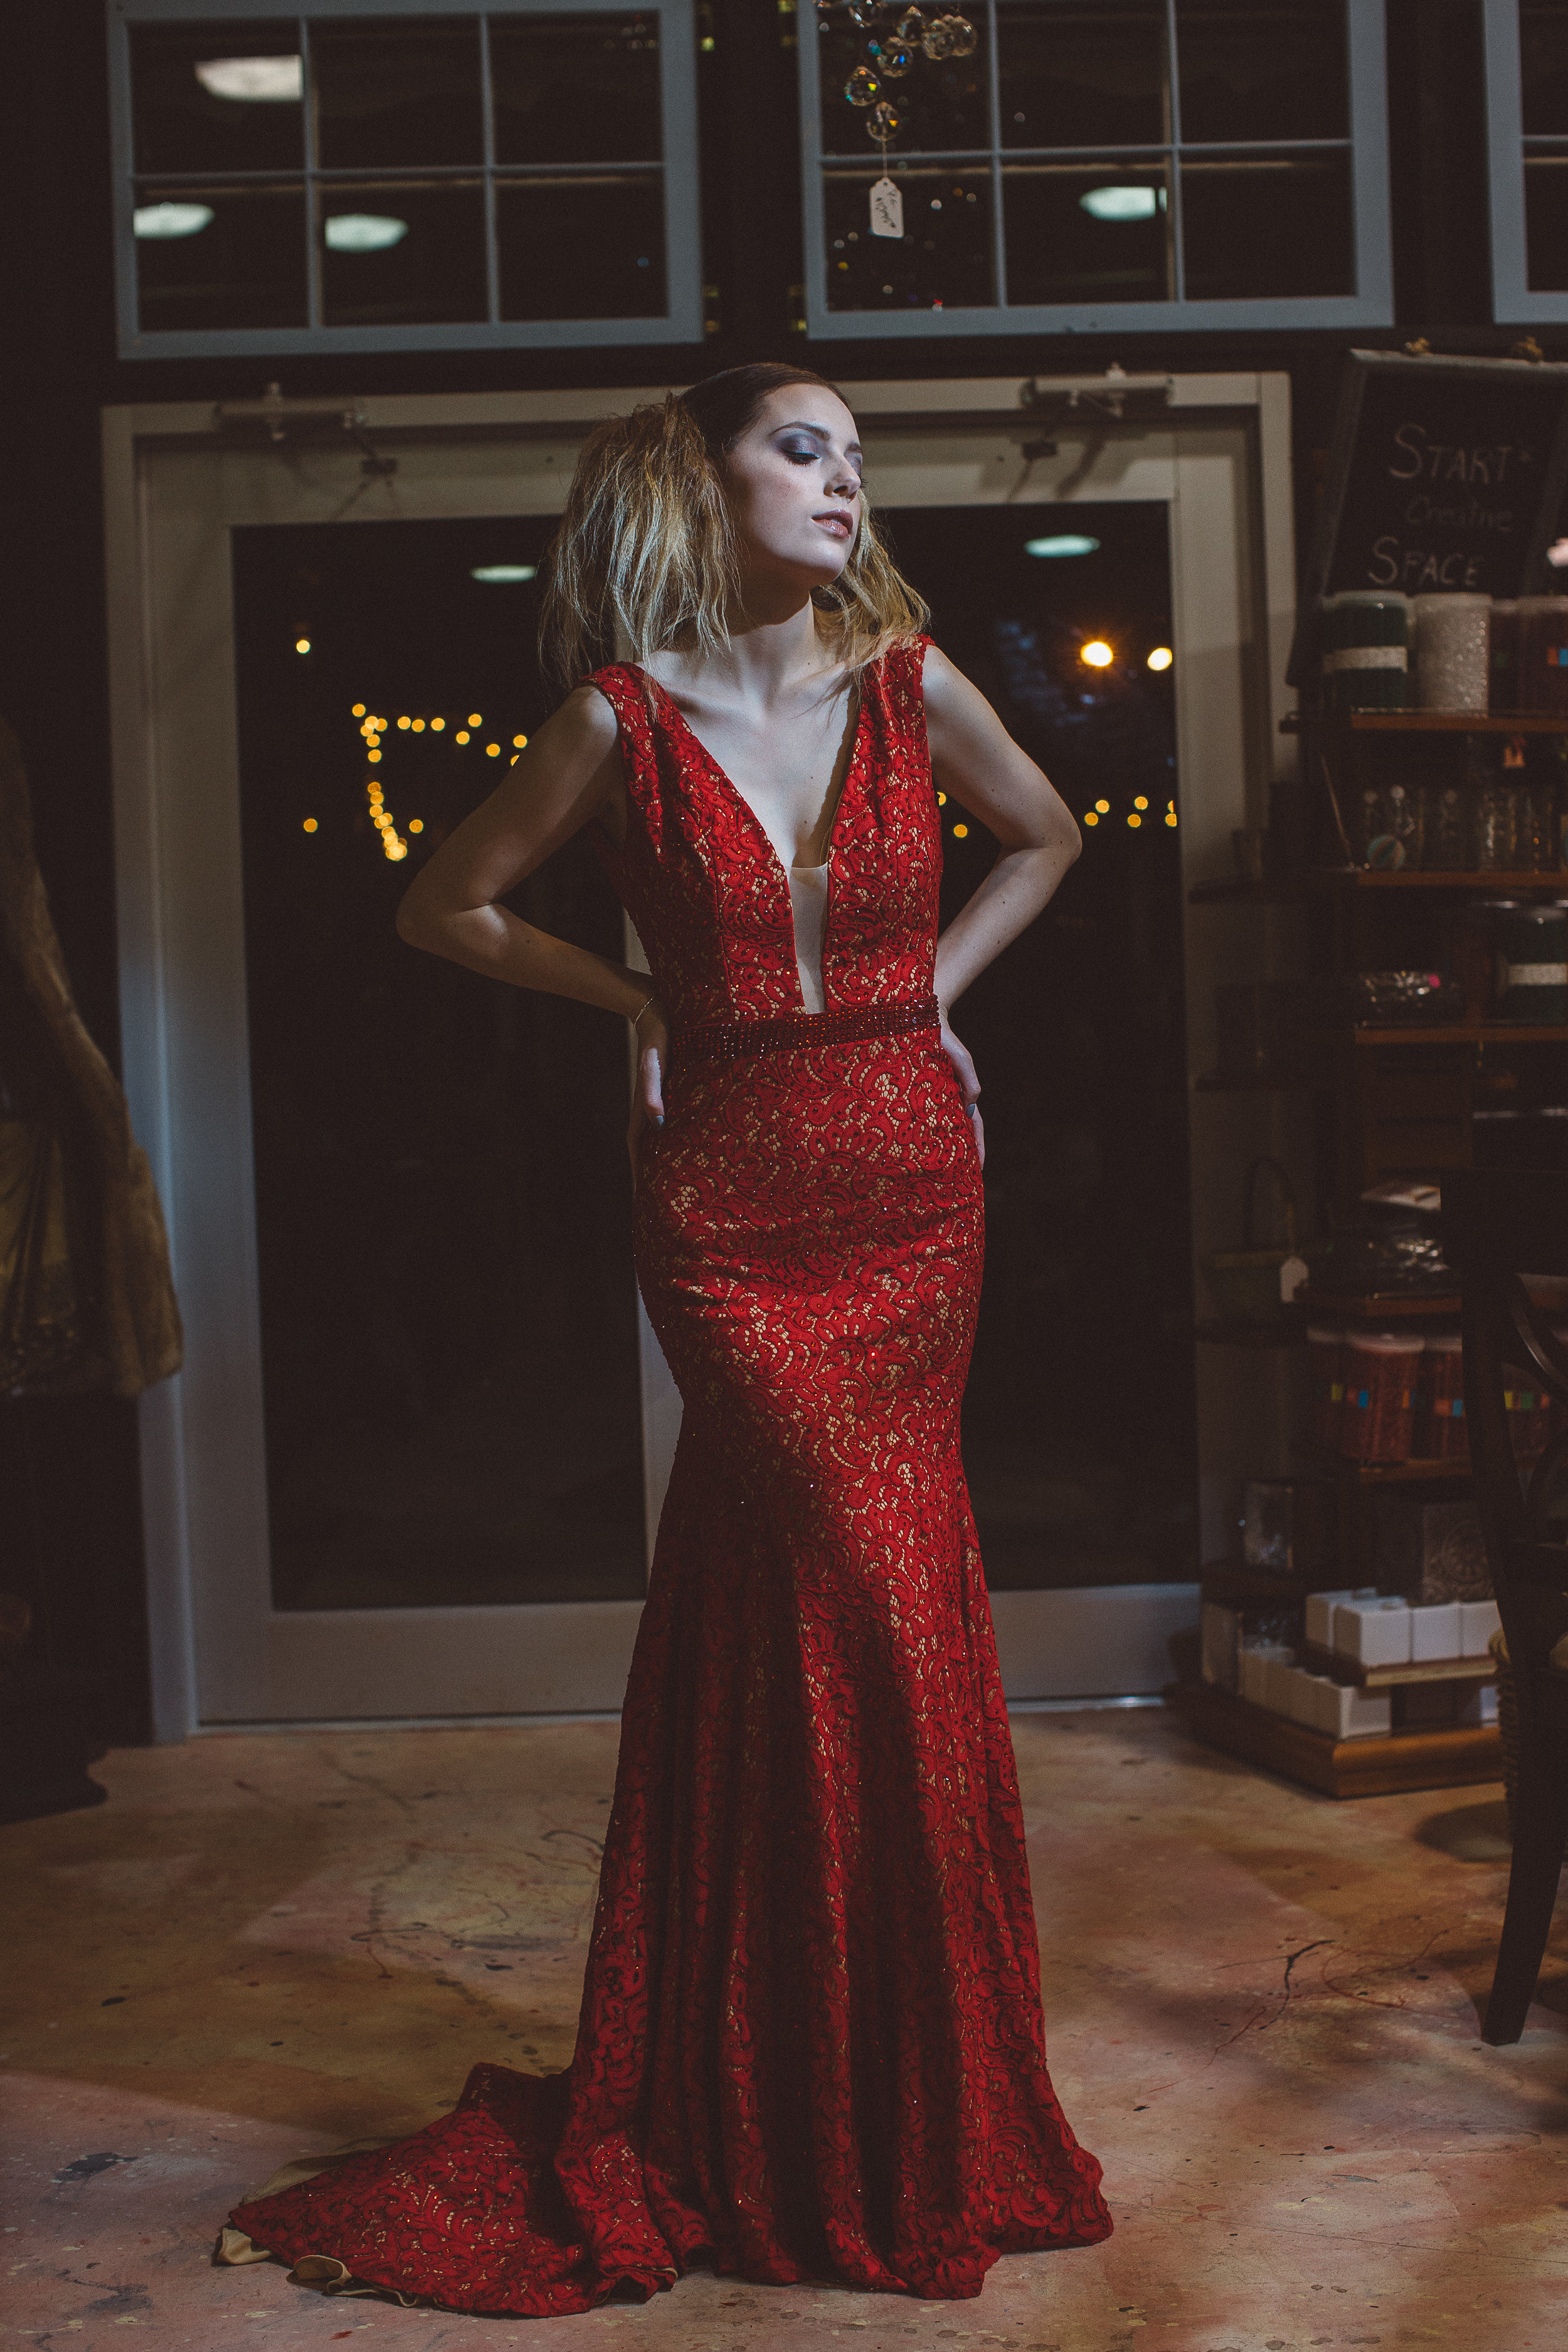 Unique Sparkly Red Plunging Neckline Floor Length Formal Dress